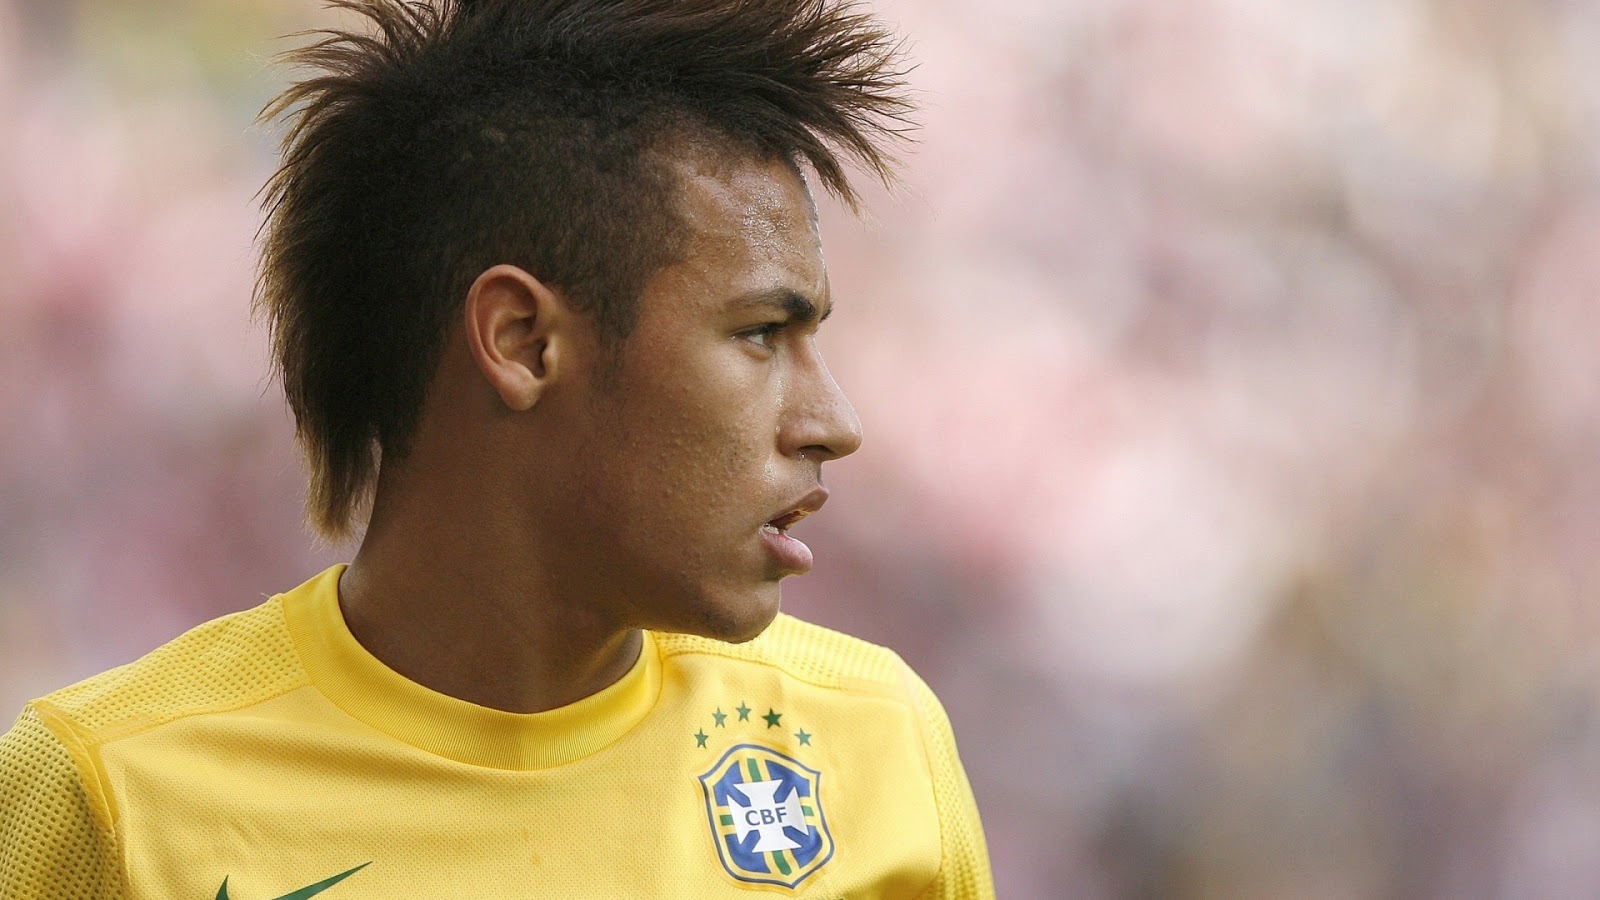 Neymar Football Star Player Full HD Desktop Wallpaper 1080p